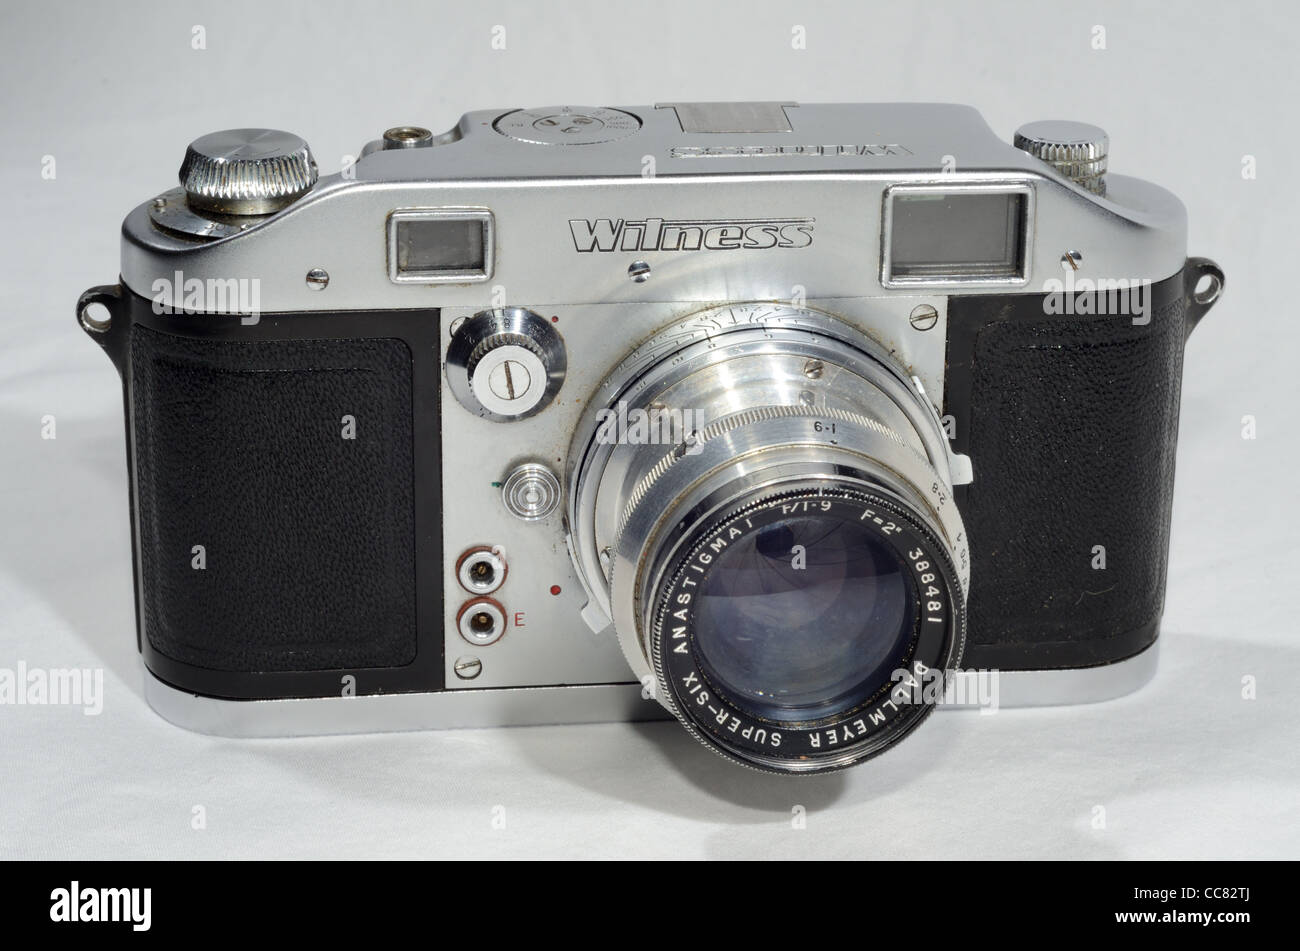 1952 Ilford Witness 35mm Rangefinder Camera Stock Photo - Alamy